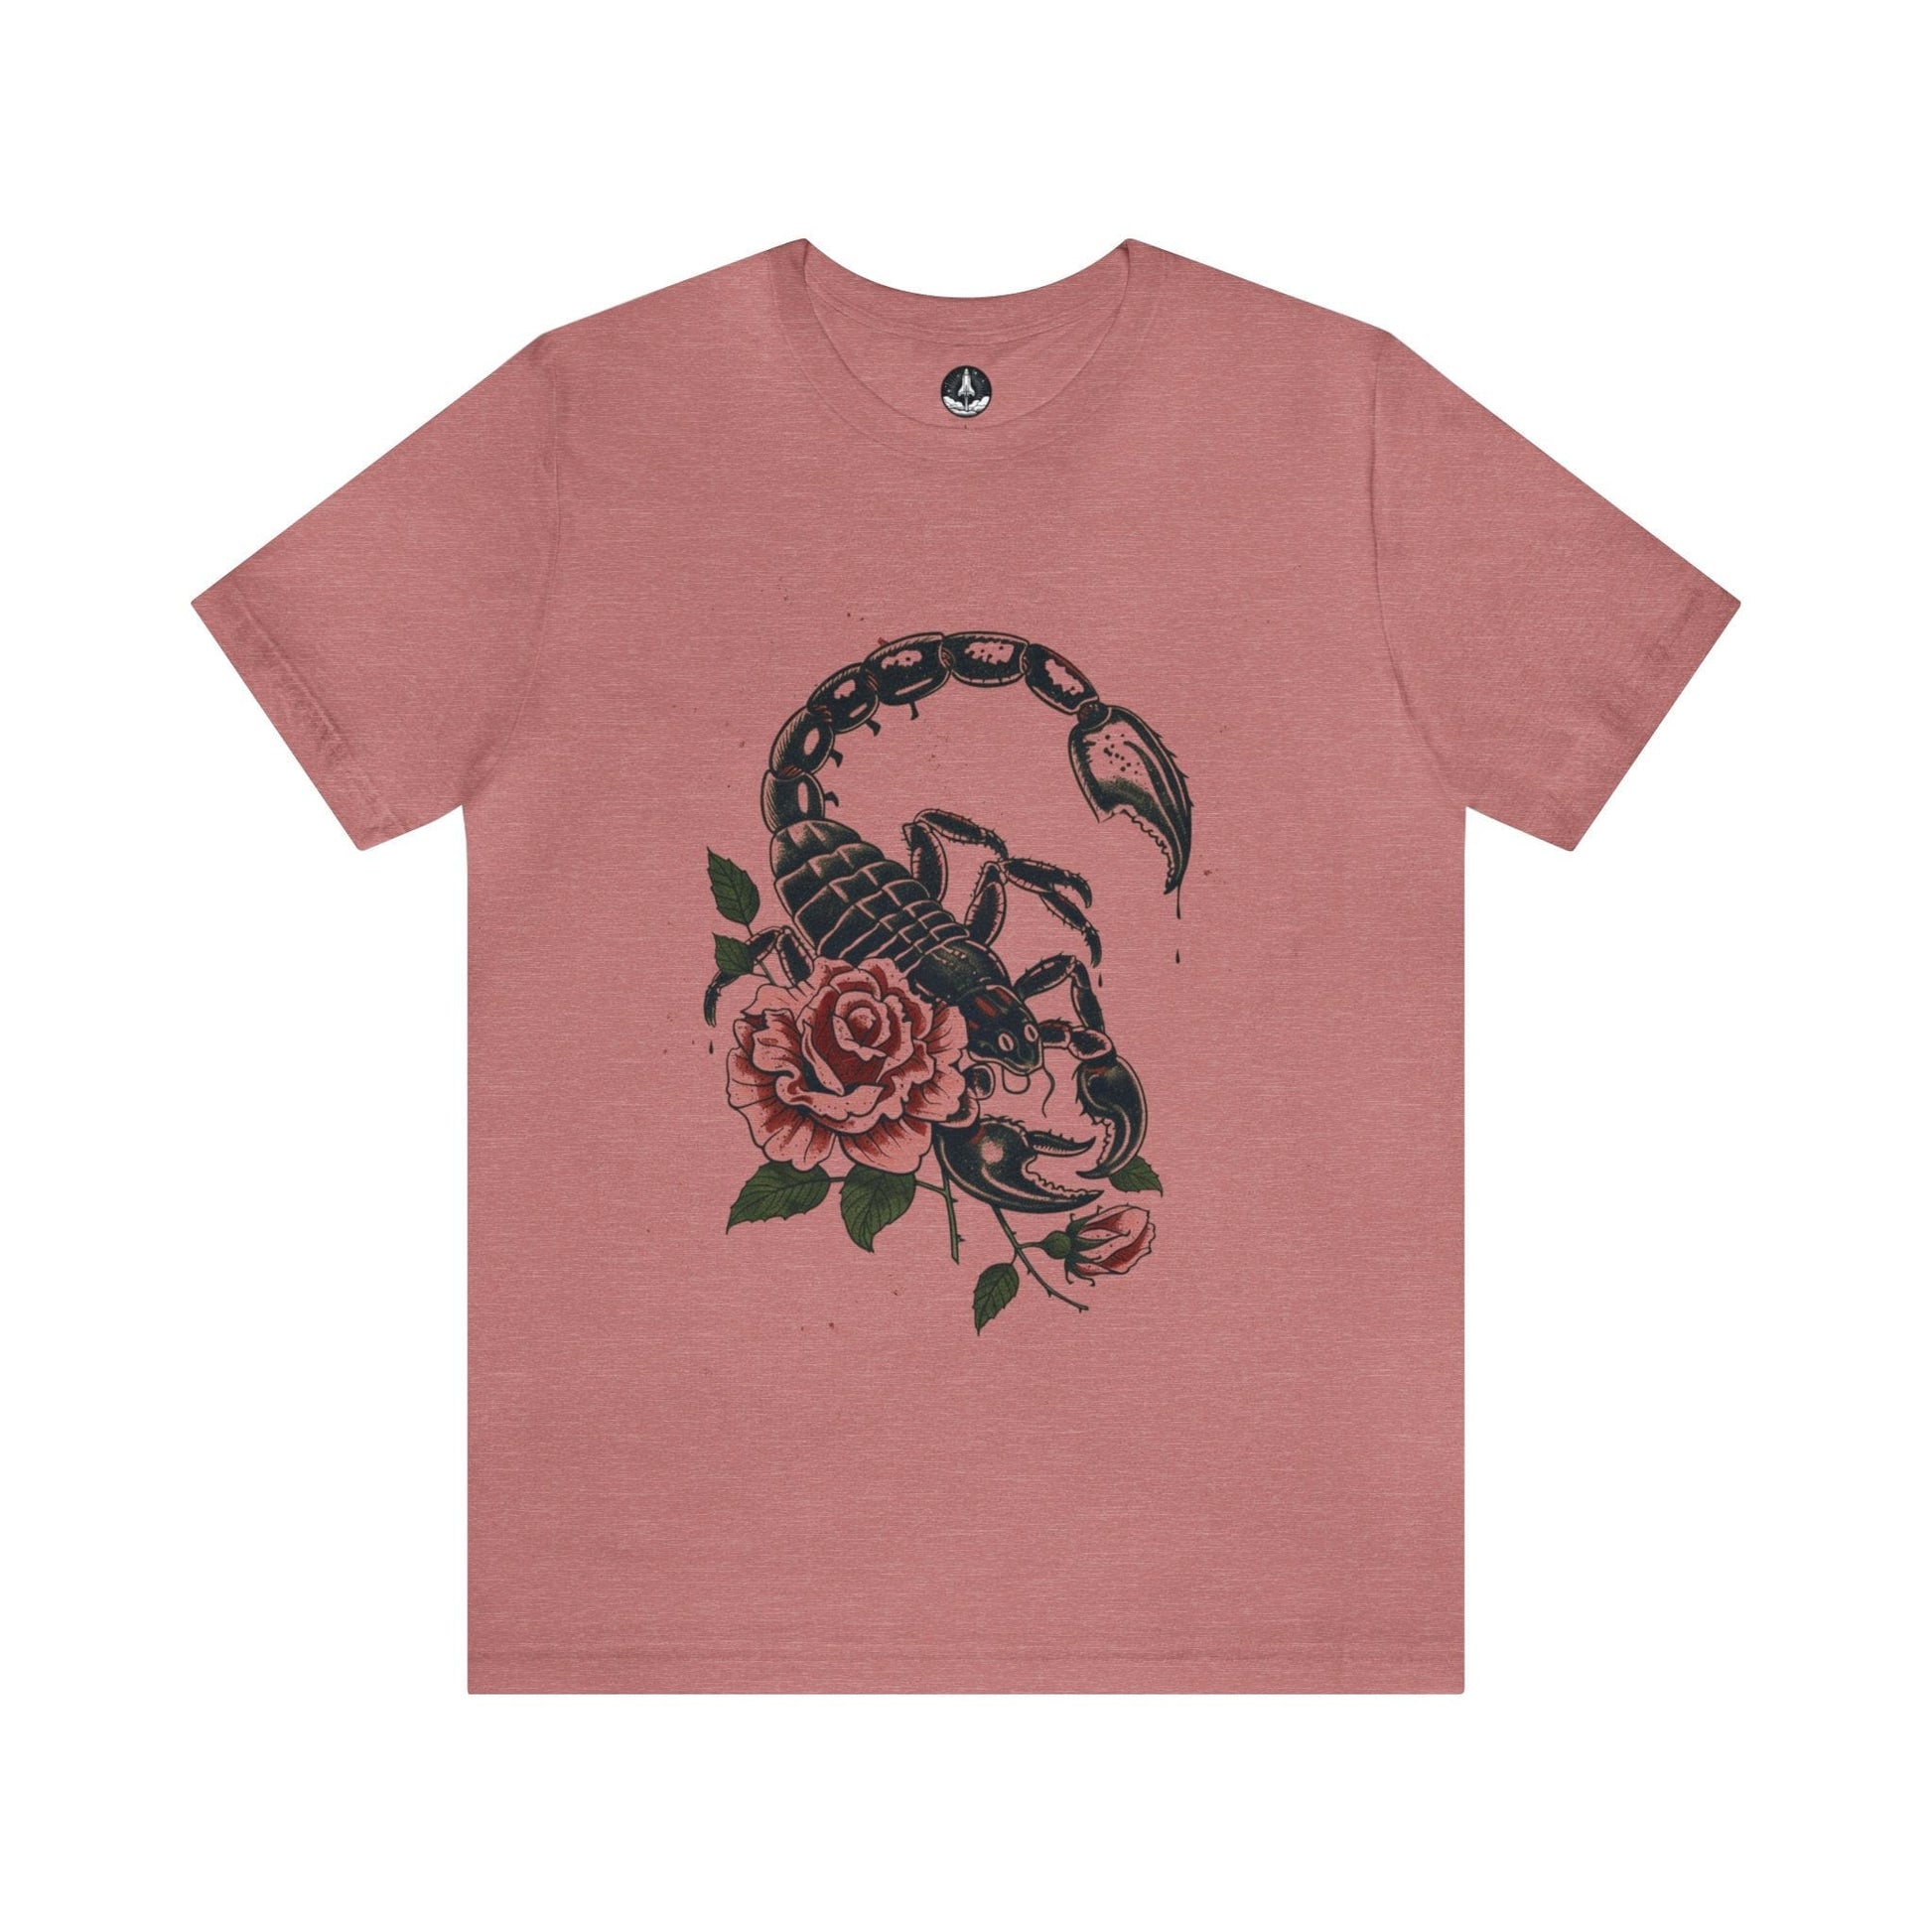 T-Shirt Heather Mauve / S Scorpio's Essence TShirt: Mystical Scorpion Art on Soft Cotton